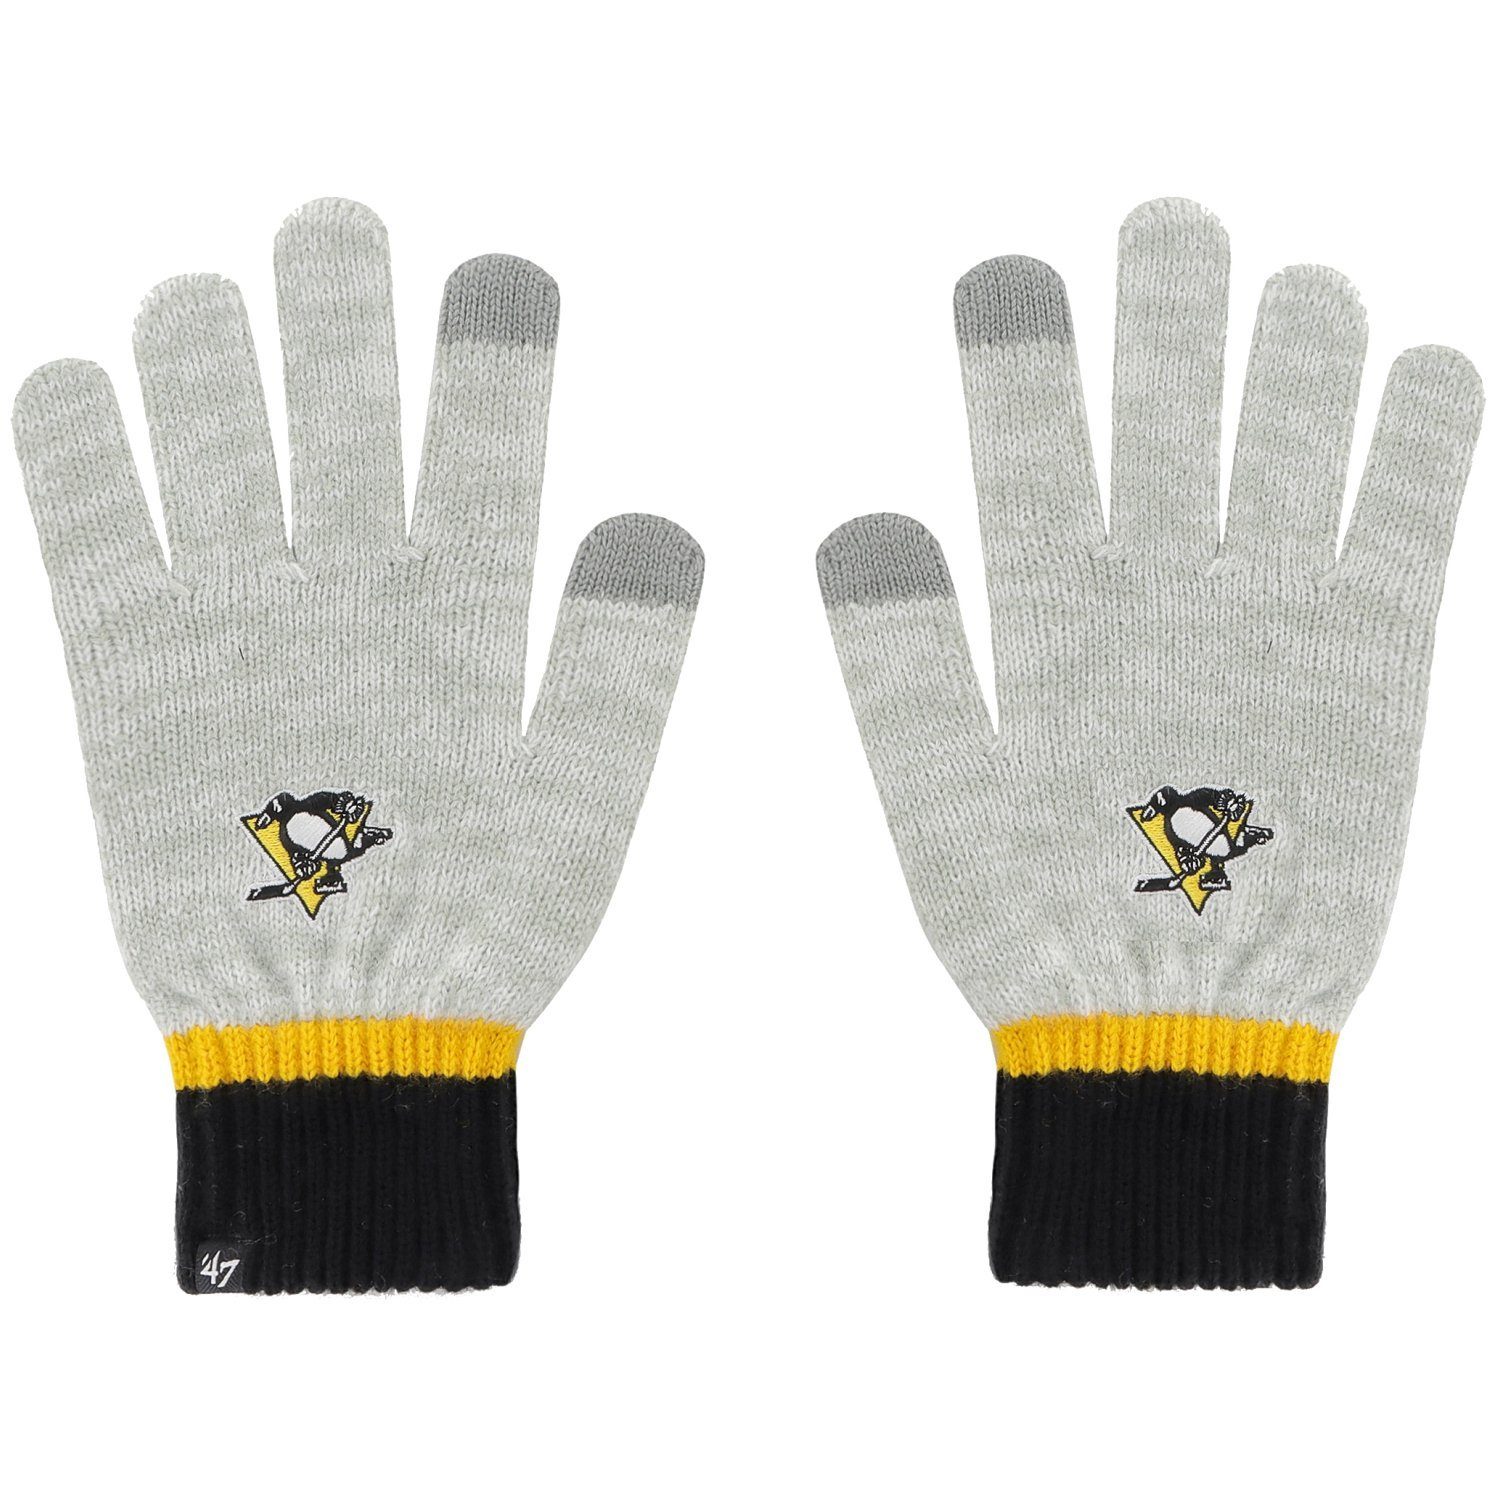 '47 Brand Multisporthandschuhe Handschuhe DEEP ZONE Pittsburgh Penguins